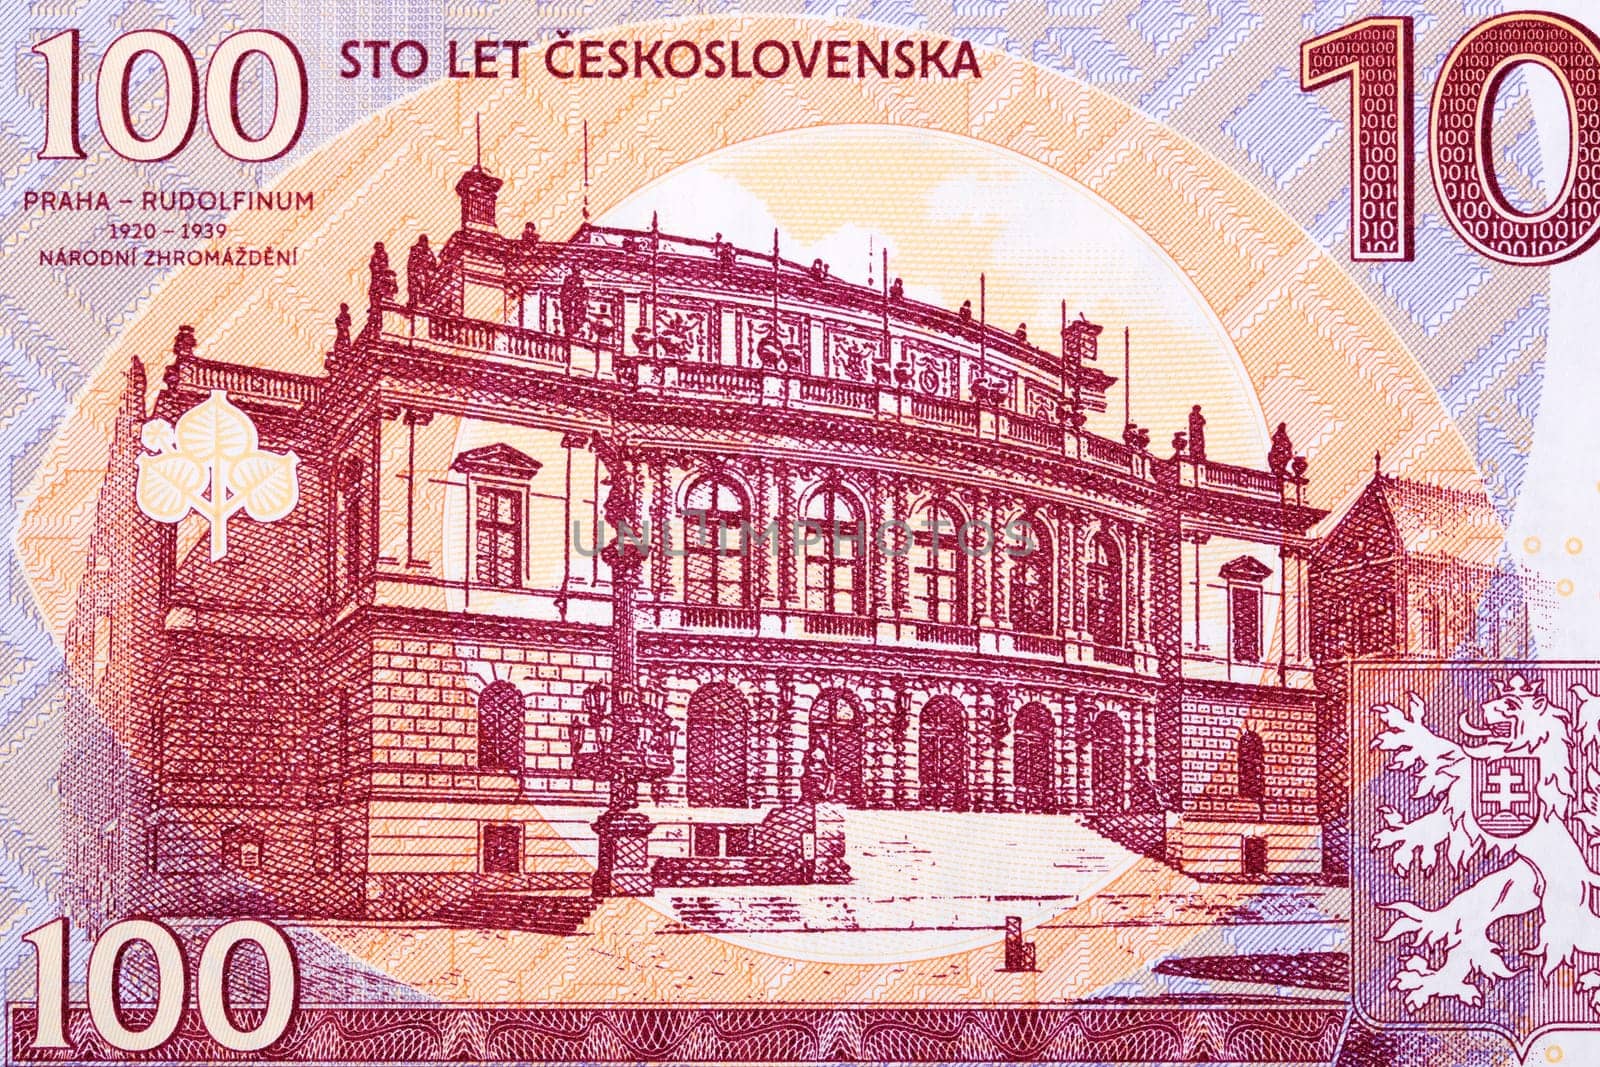 Prague - Rudolfinum from Czechoslovak money by johan10